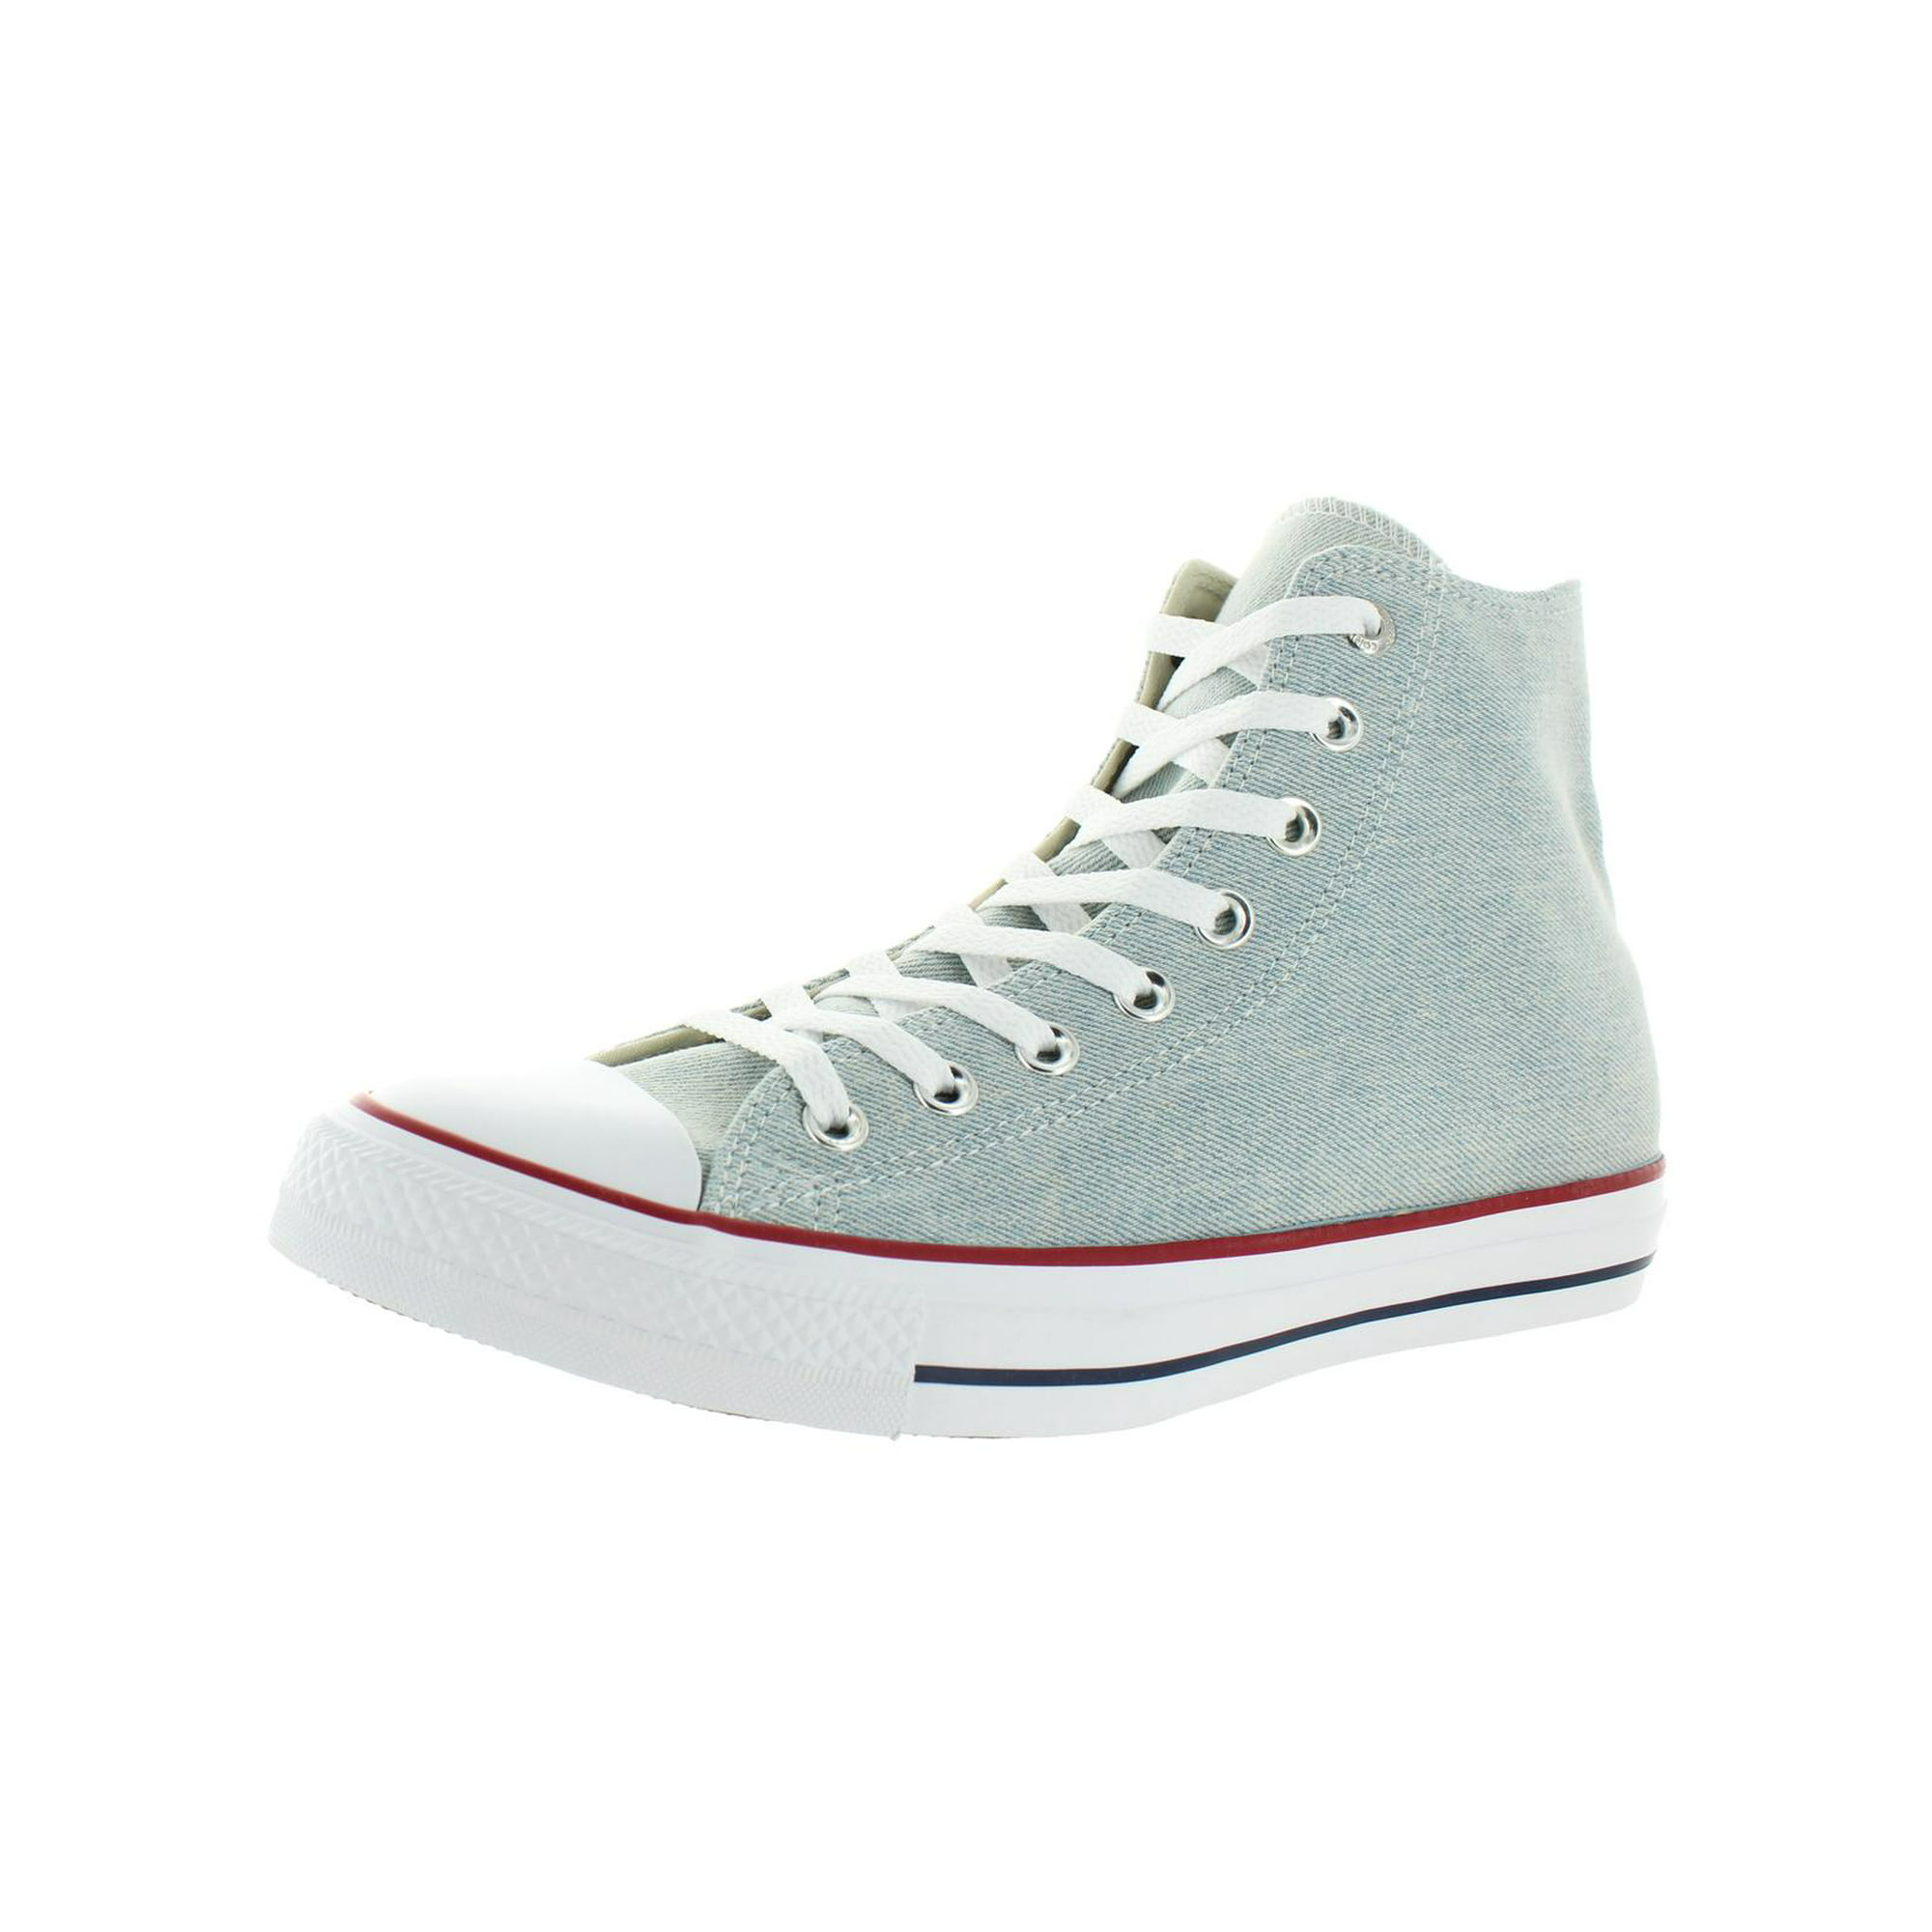 Converse Chuck Star Hi Unisex Shoes Light Blue-White-Brown 161491c - Walmart.com